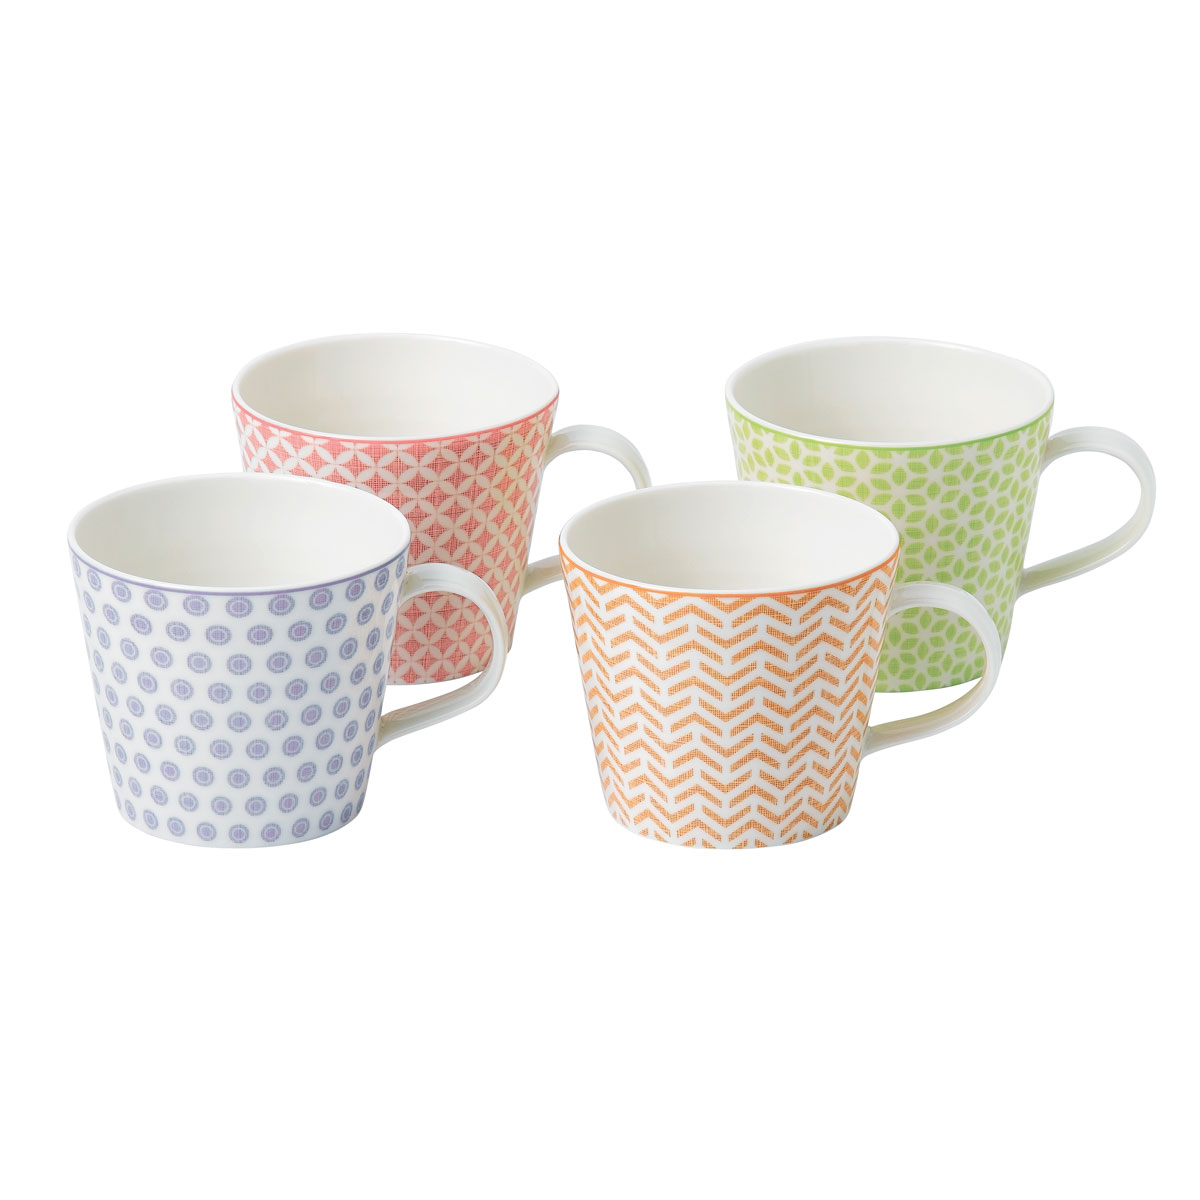 Royal Doulton Pastels Accent Mugs Set of 4 Mixed Patterns